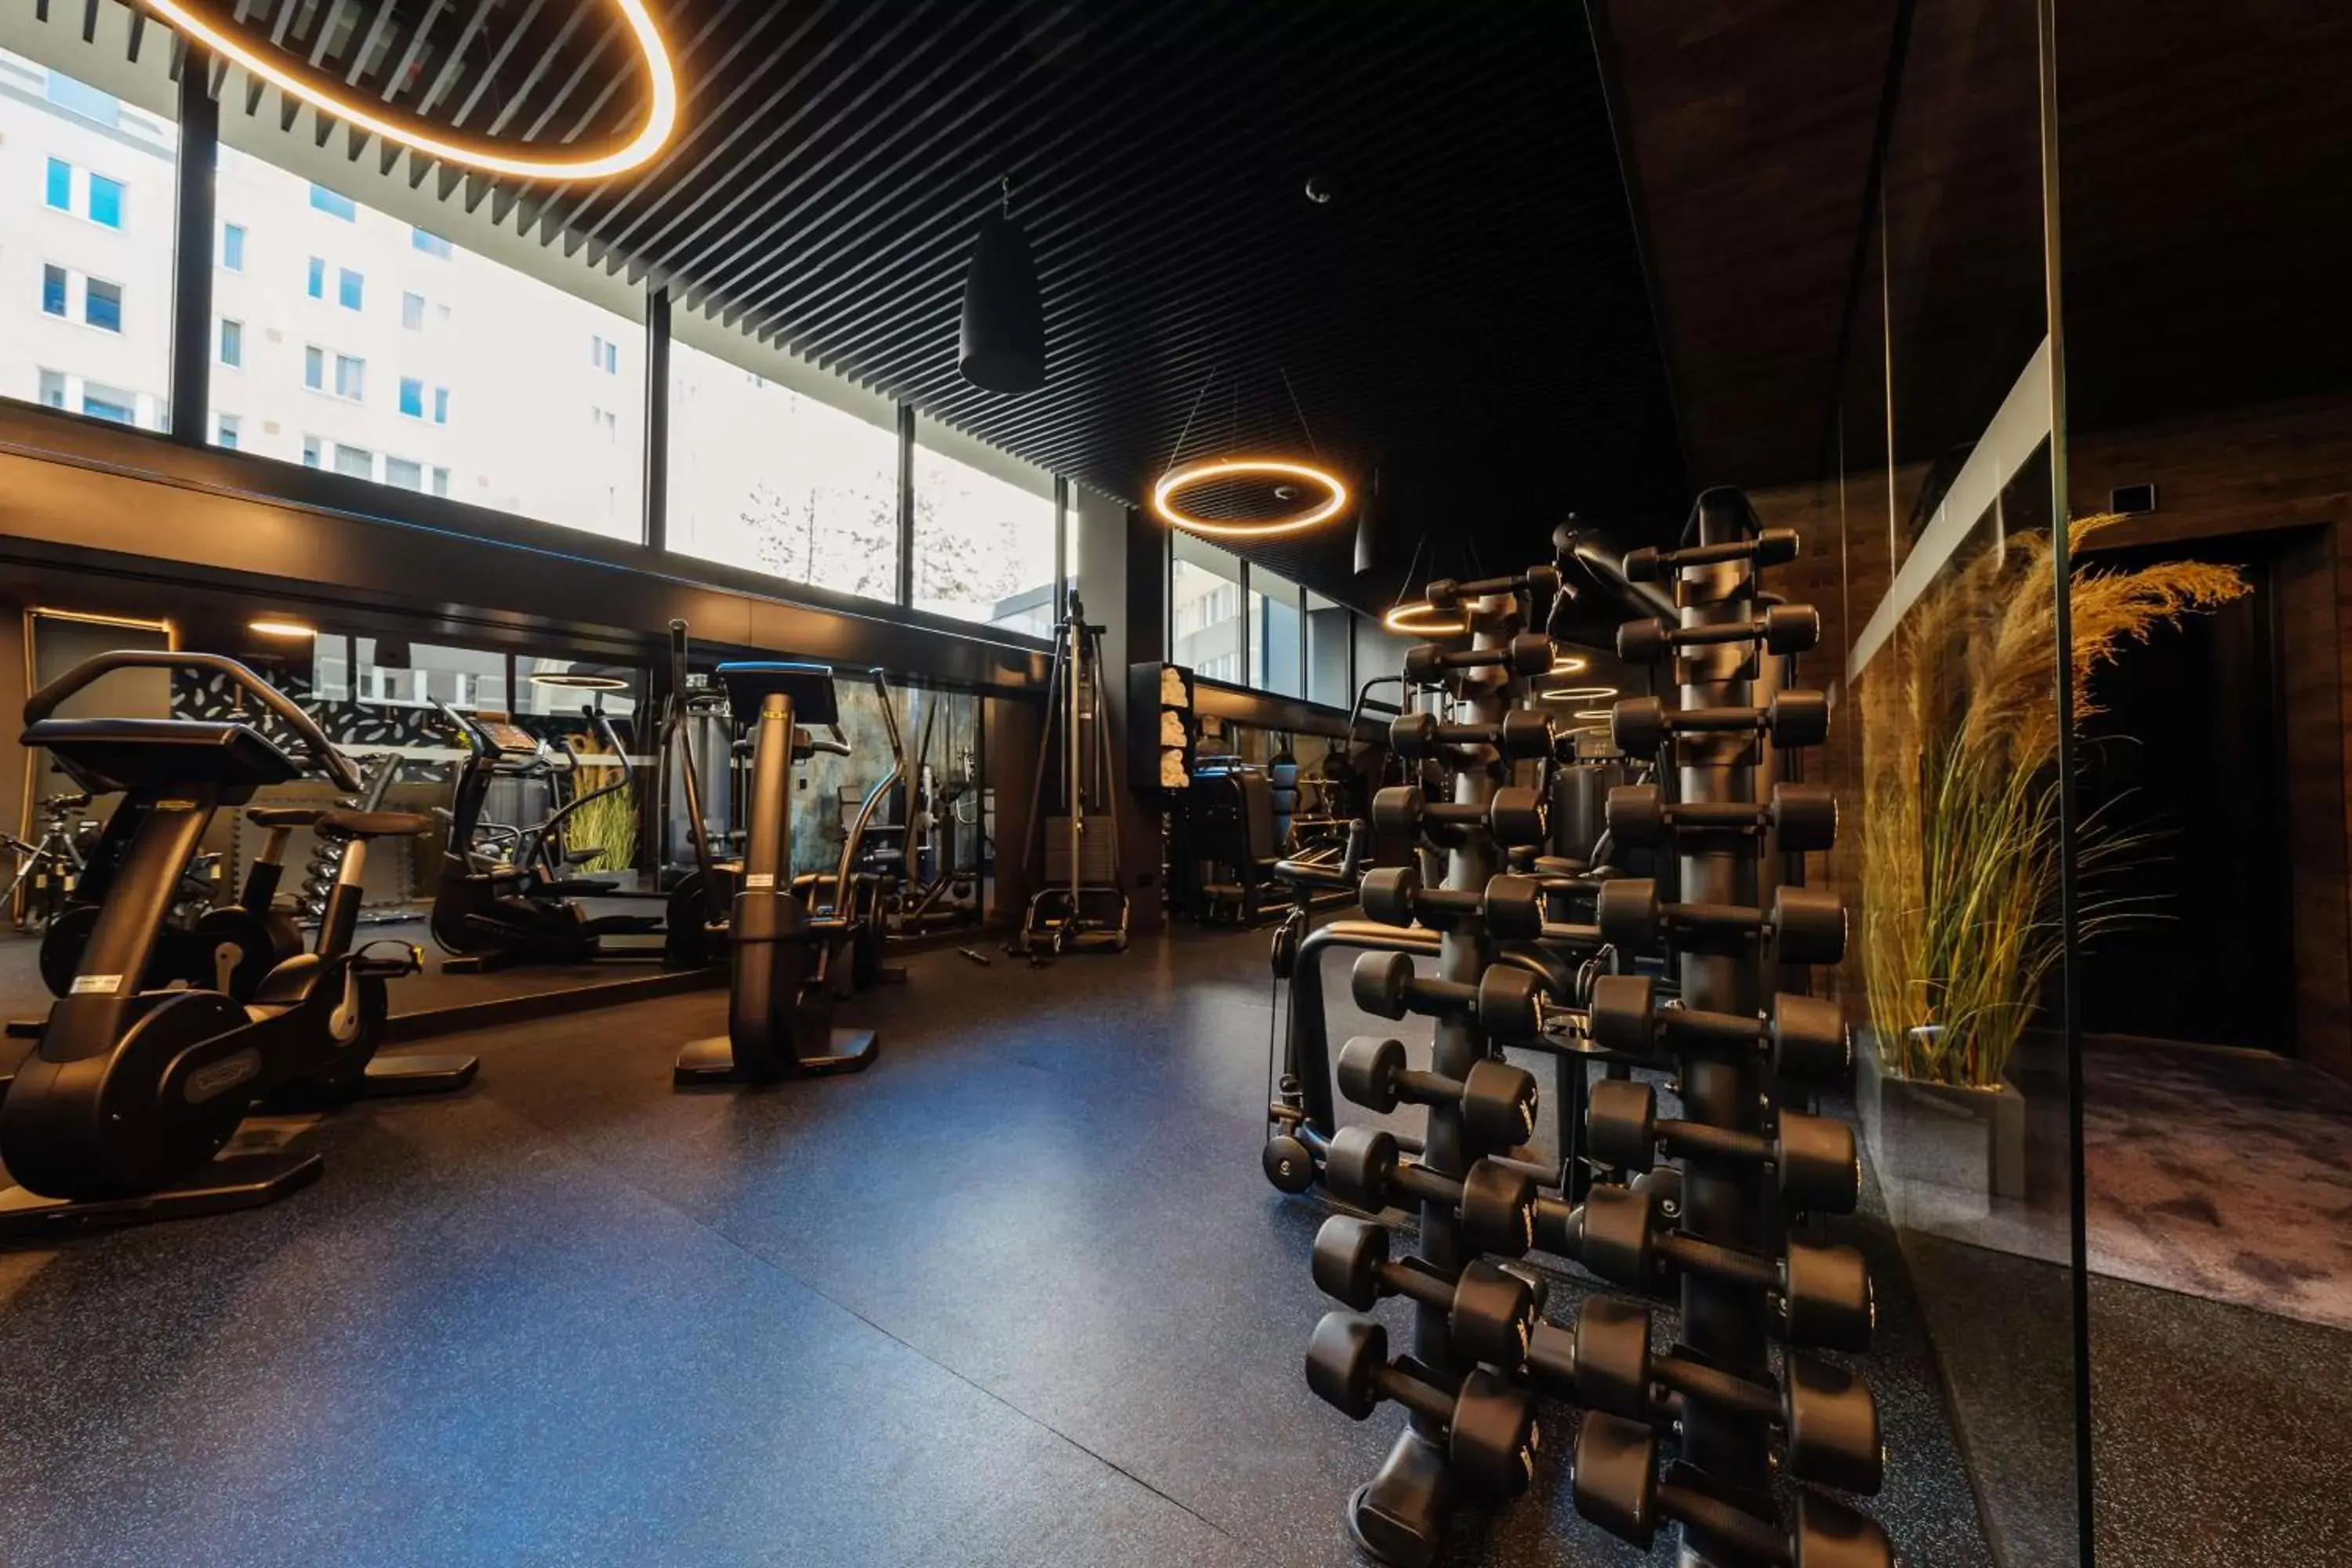 Fitness centre/facilities, Fitness Center/Facilities in Radisson Blu Carlton Hotel, Bratislava